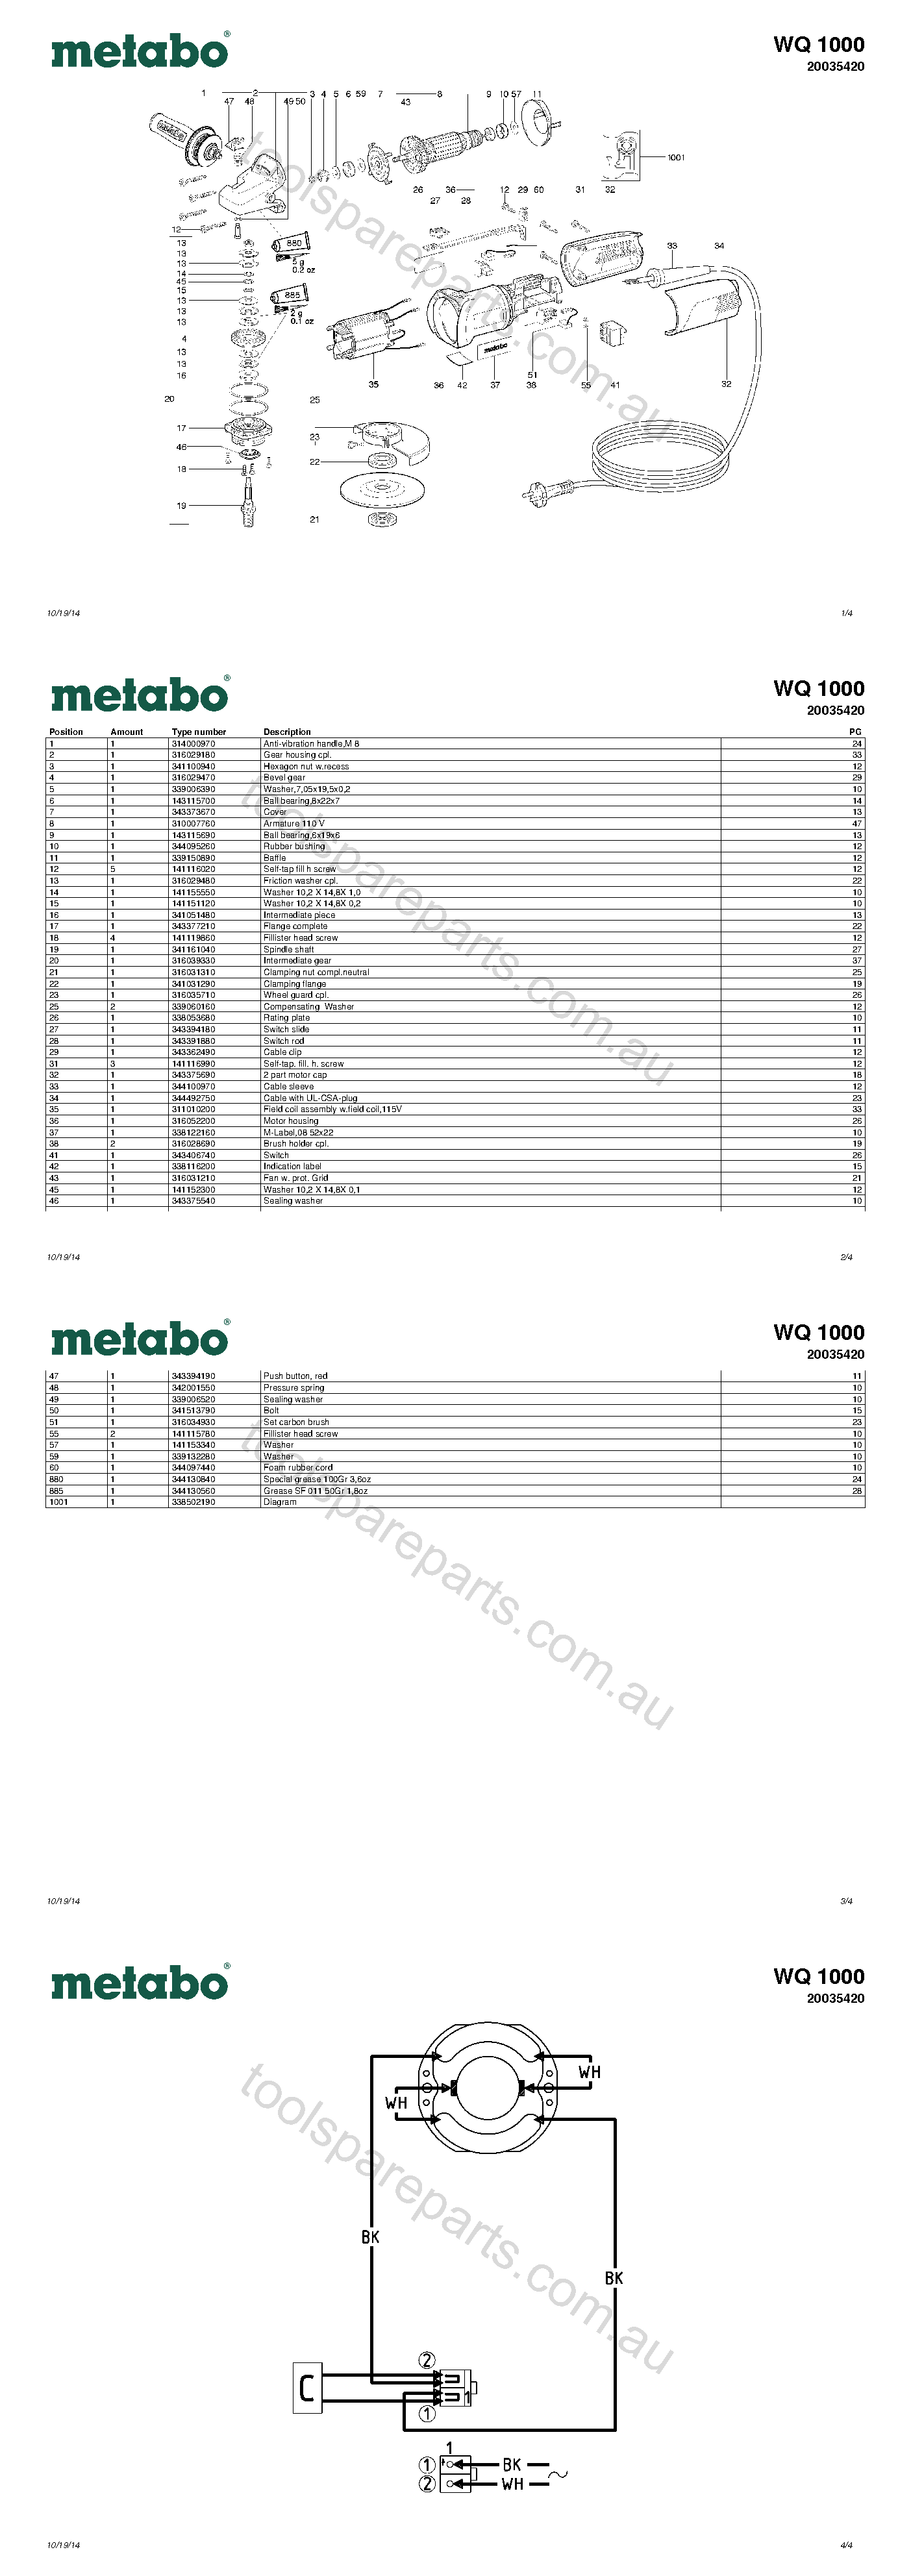 Metabo WQ 1000 20035420  Diagram 1